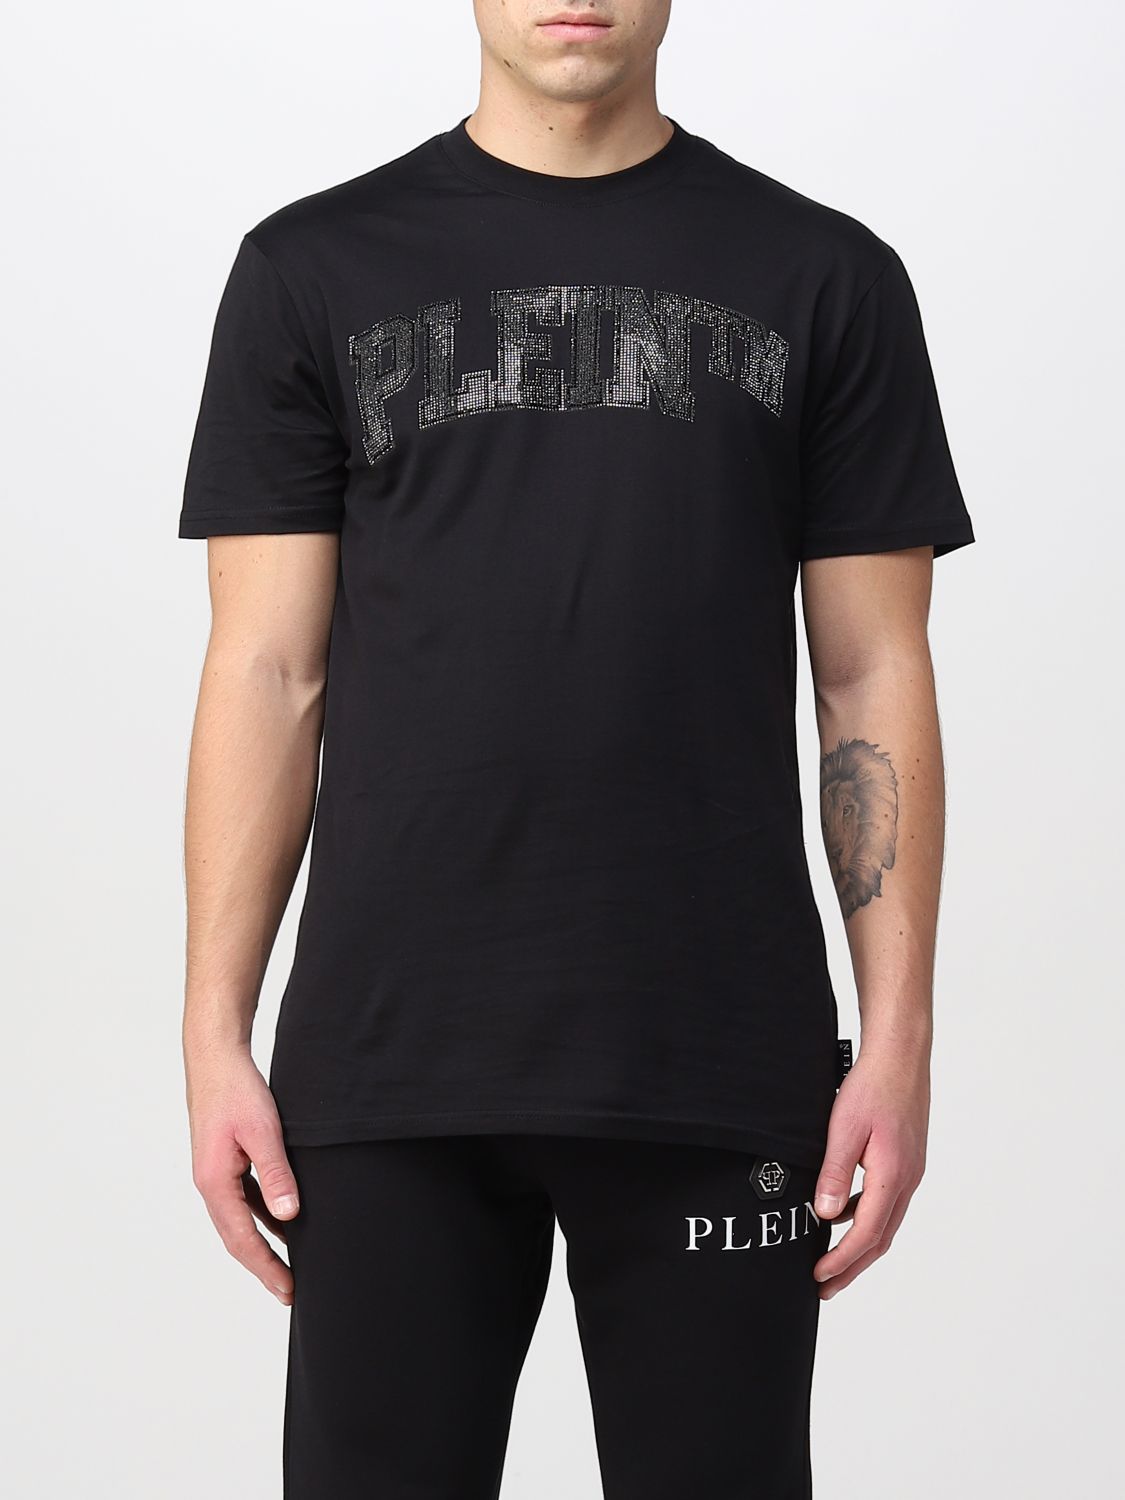 kleding cassette Huis Philipp Plein Outlet: t-shirt for man - Black 1 | Philipp Plein t-shirt  FABCMTK5639PJY002N online on GIGLIO.COM